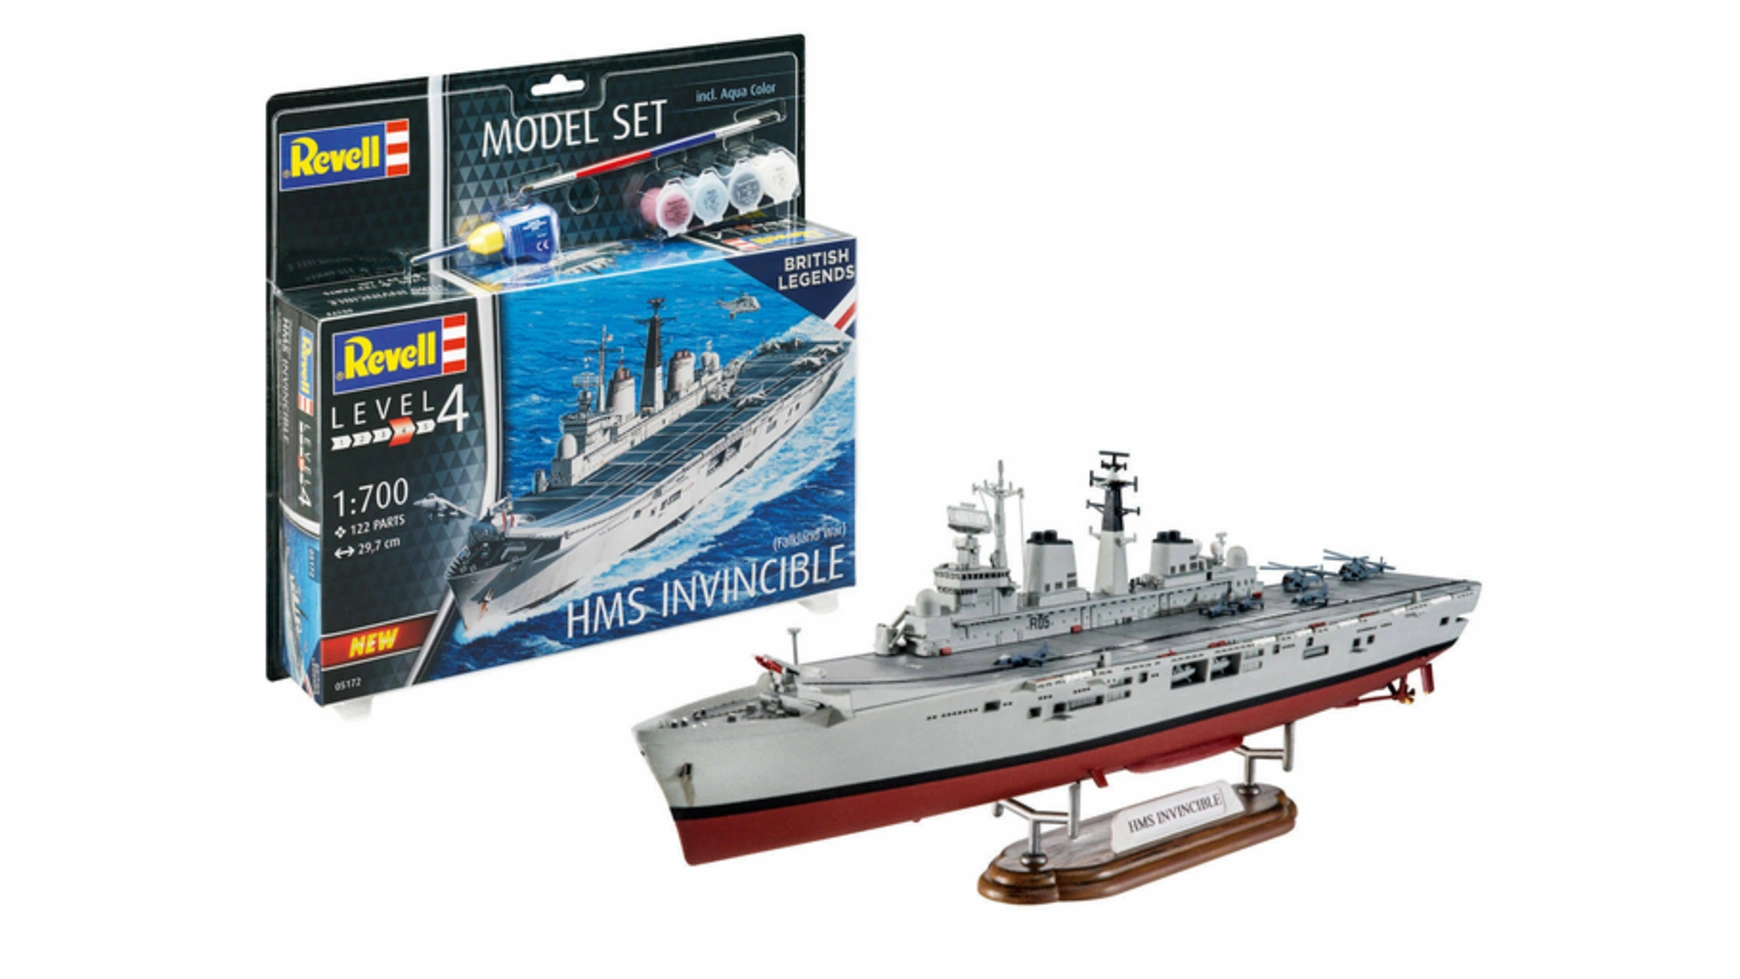 Набор моделей Revell HMS Invincible (Фолклендская война)